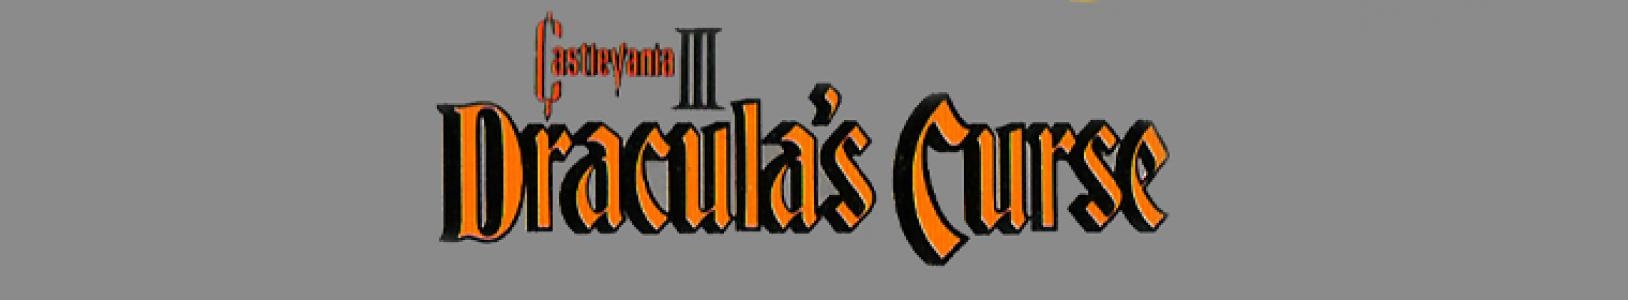 Castlevania III: Dracula's Curse banner